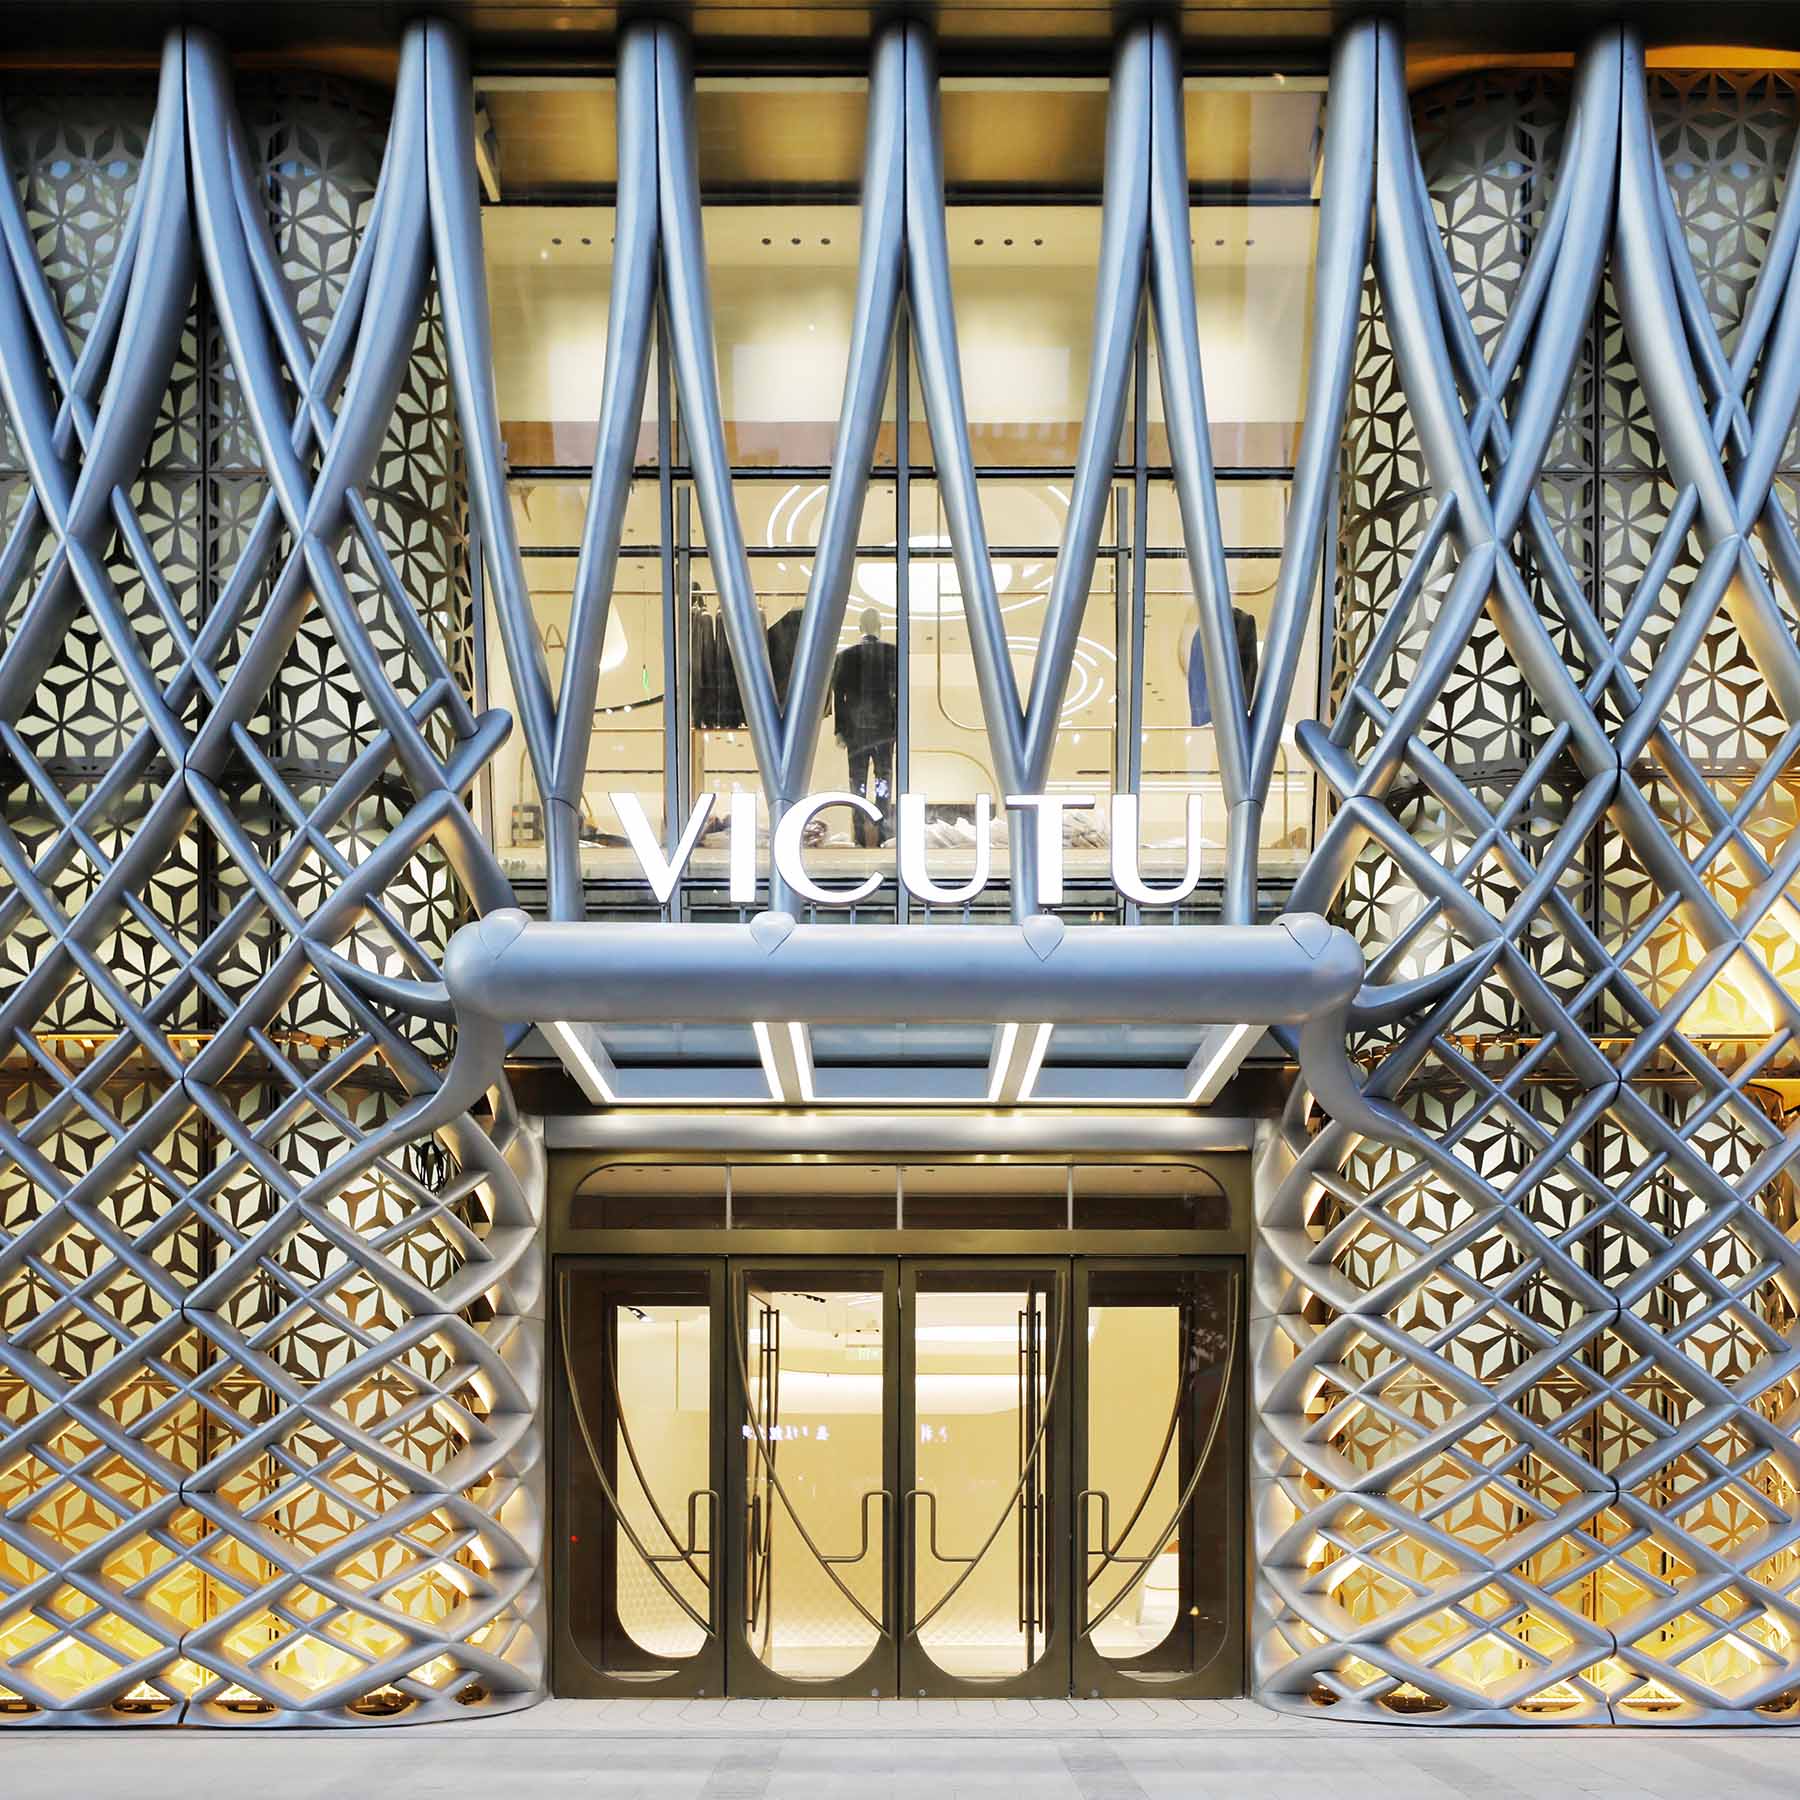 Vicutu Concept Flagship Store by Antistatics Architecture